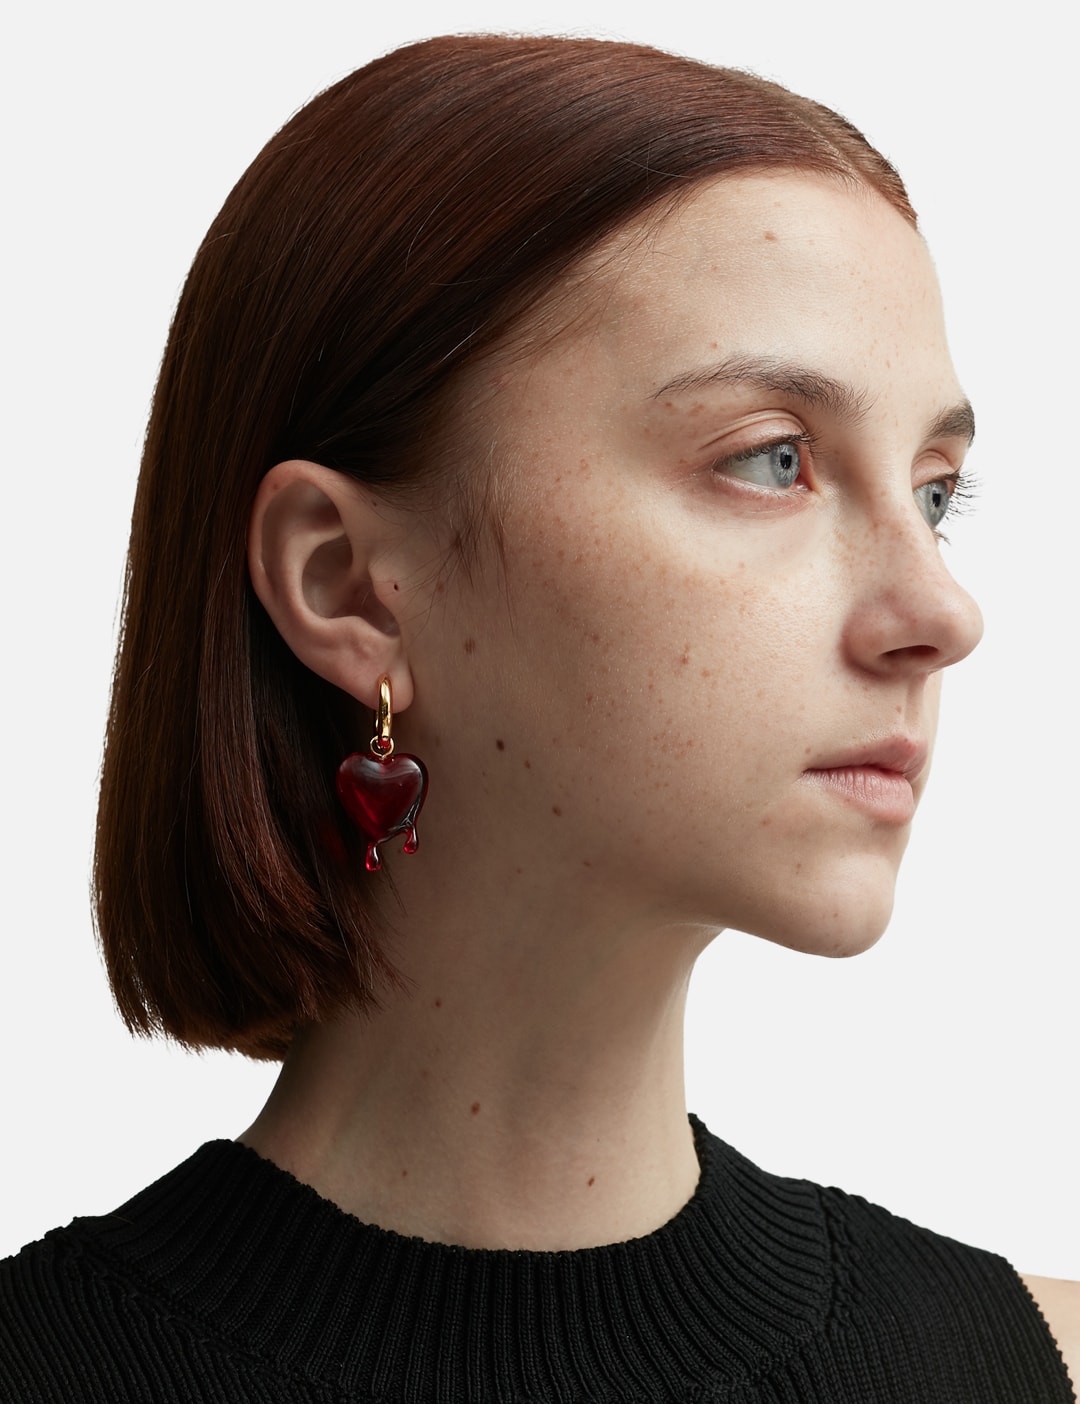 Prada - Prada Symbol Earrings  HBX - Globally Curated Fashion and